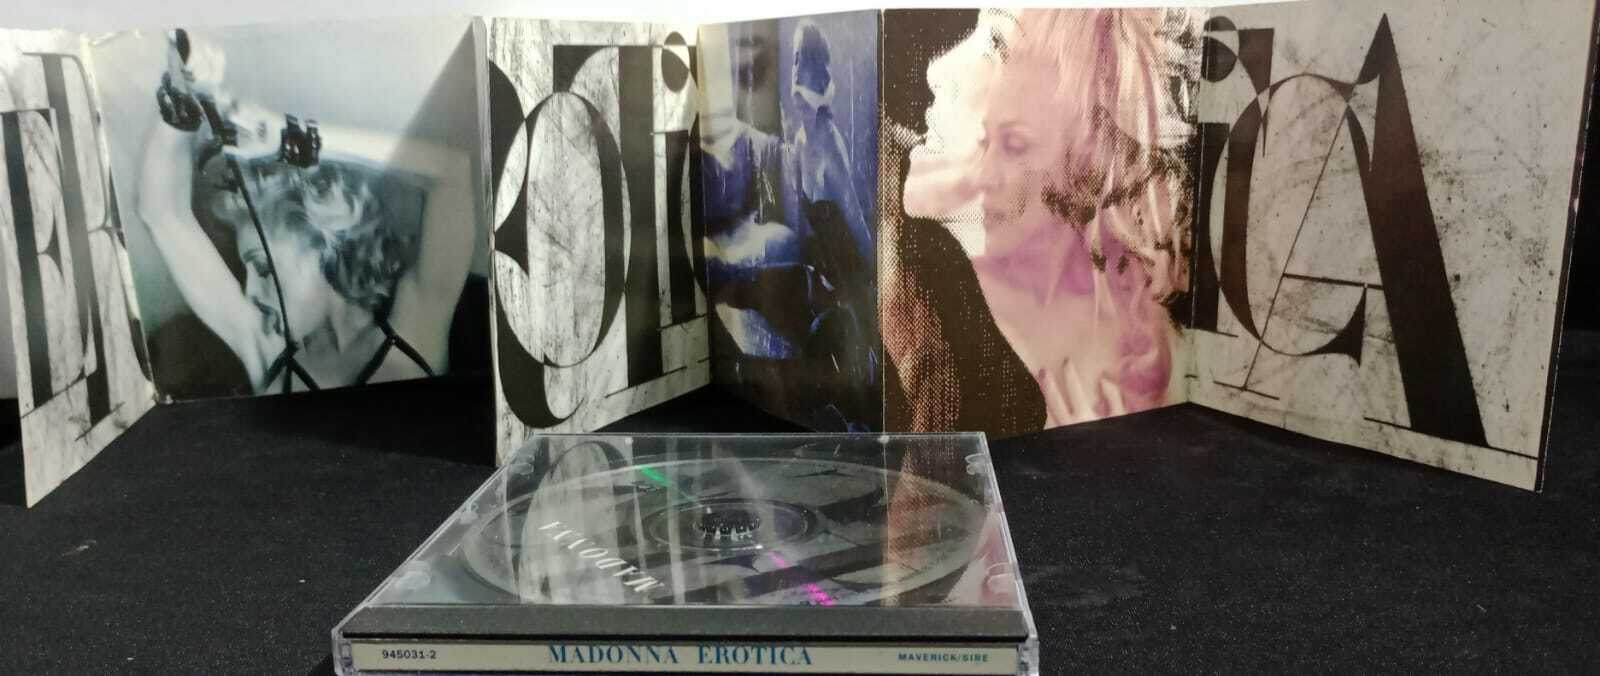 CD - Madonna - Erotica